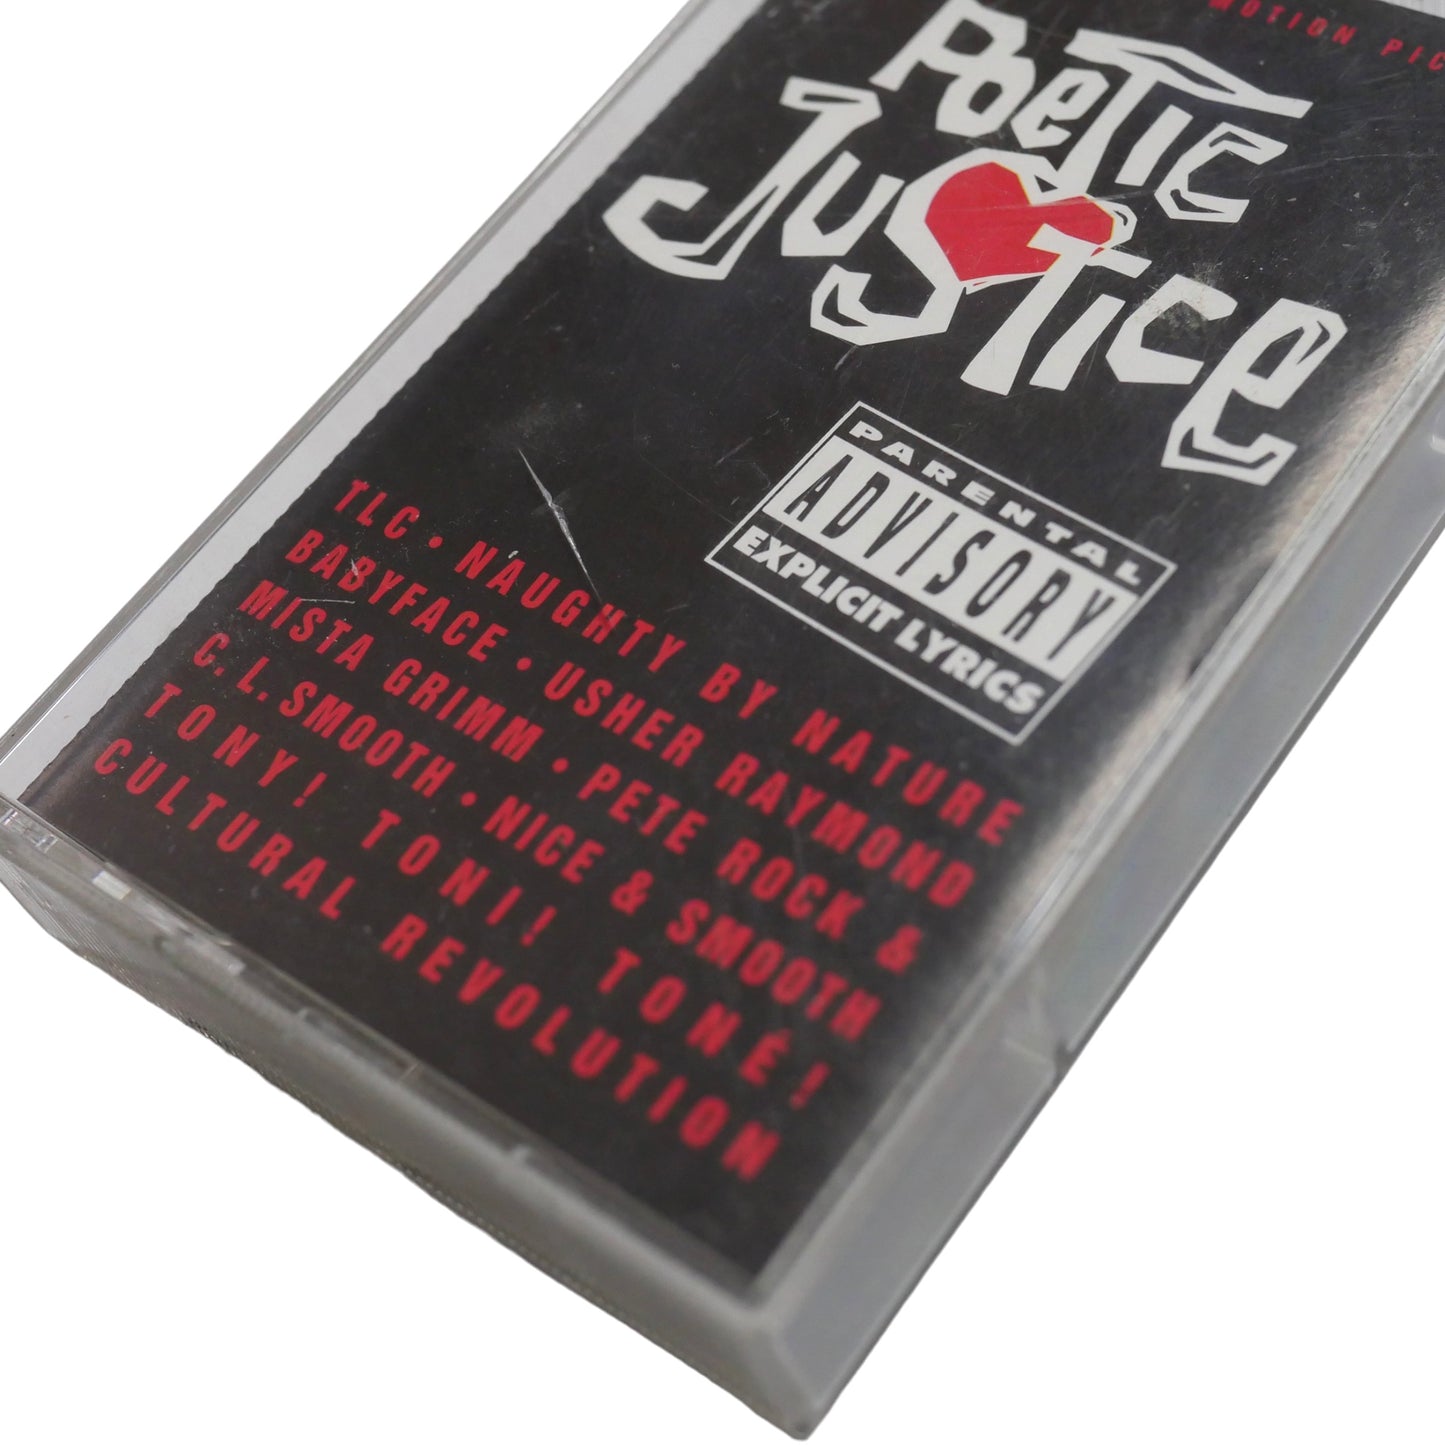 Poetic Justice Soundtrack Cassette